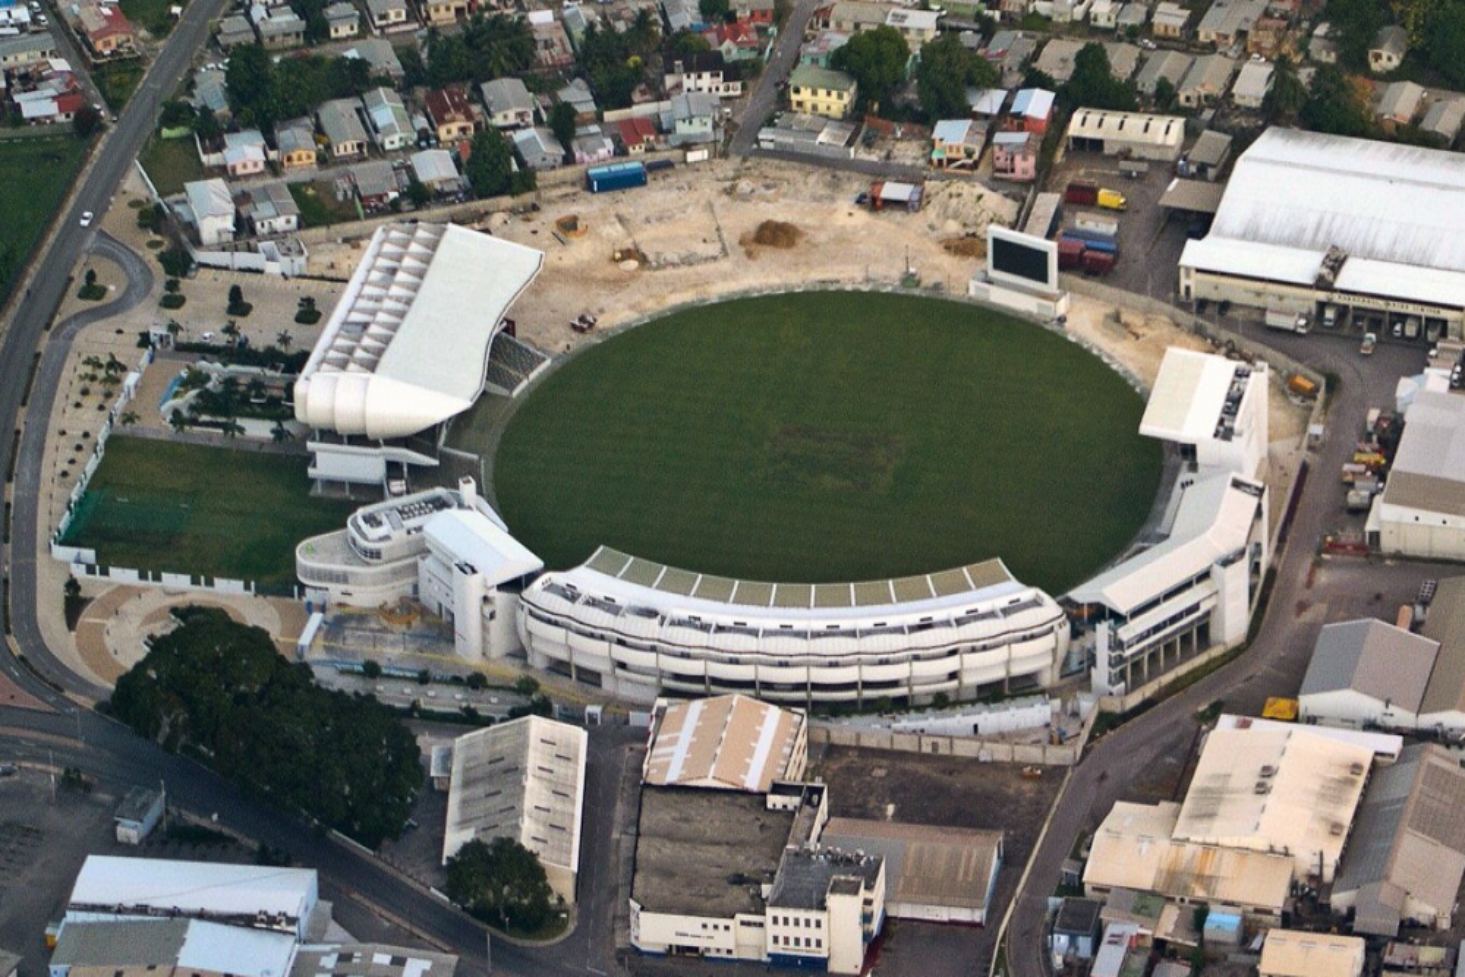 The Charm of Kensington Oval Barbados